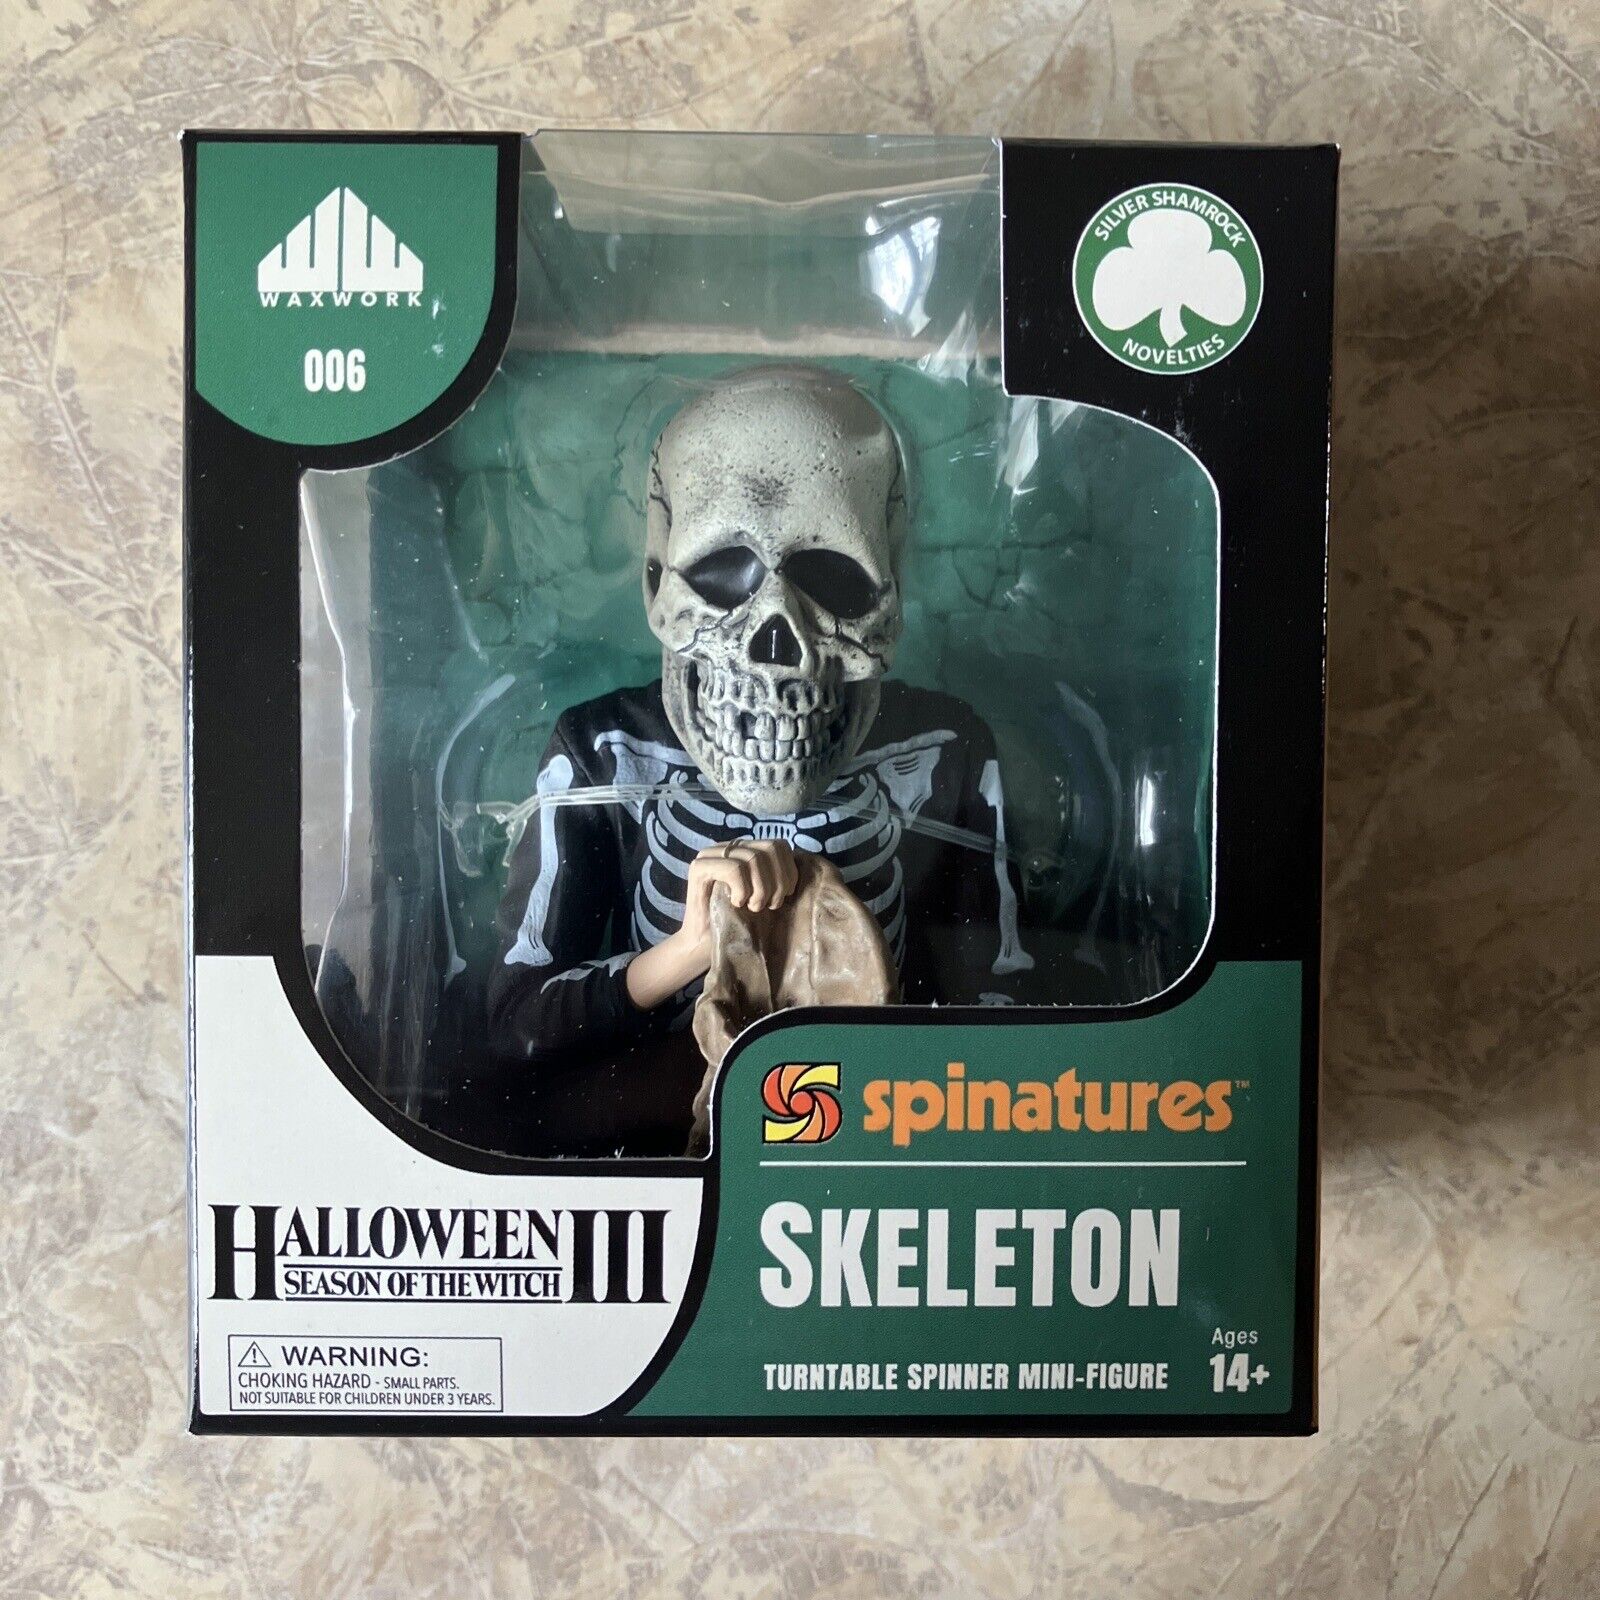 Halloween III Season of the Witch Skeleton Spinature Vinyl Figure Waxwork - NEW